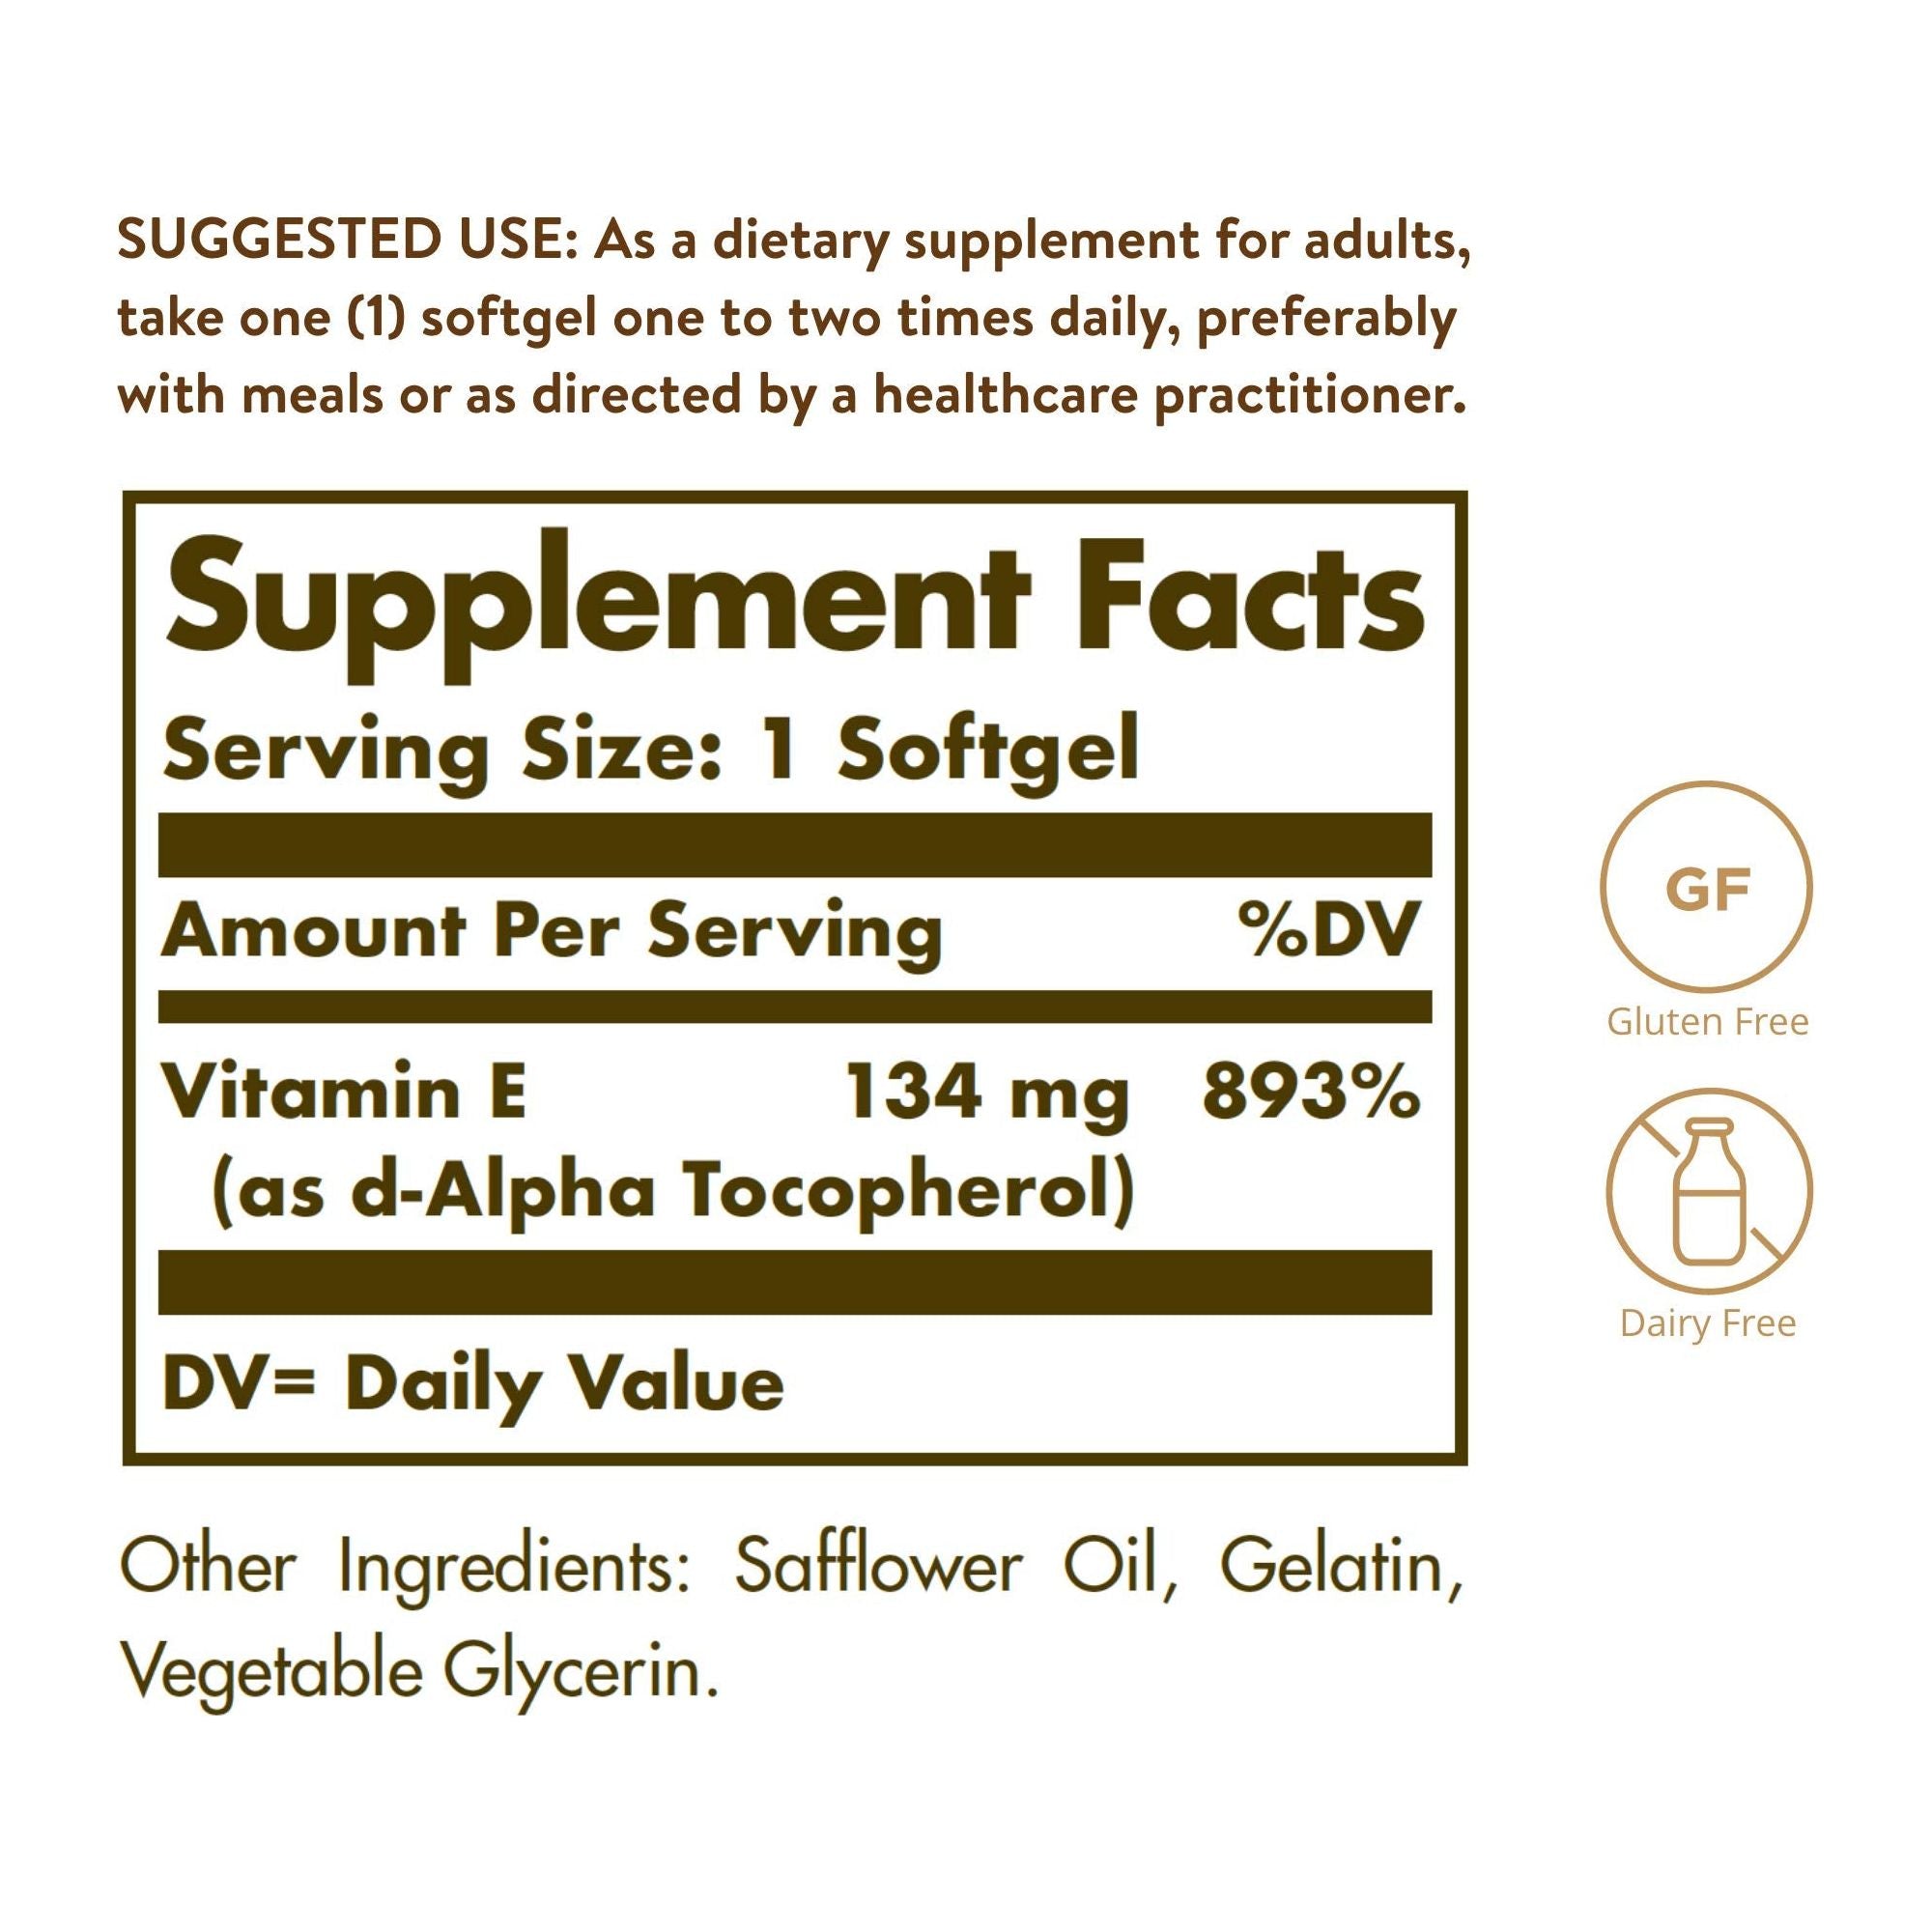 Solgar Vitamin E 200 IU Alpha, 100 Softgels - Antioxidant, Healthy Aging, Healthy Skin, Immune System Support - Natural Source Vitamin E - Gluten Free, Dairy Free - 100 Servings